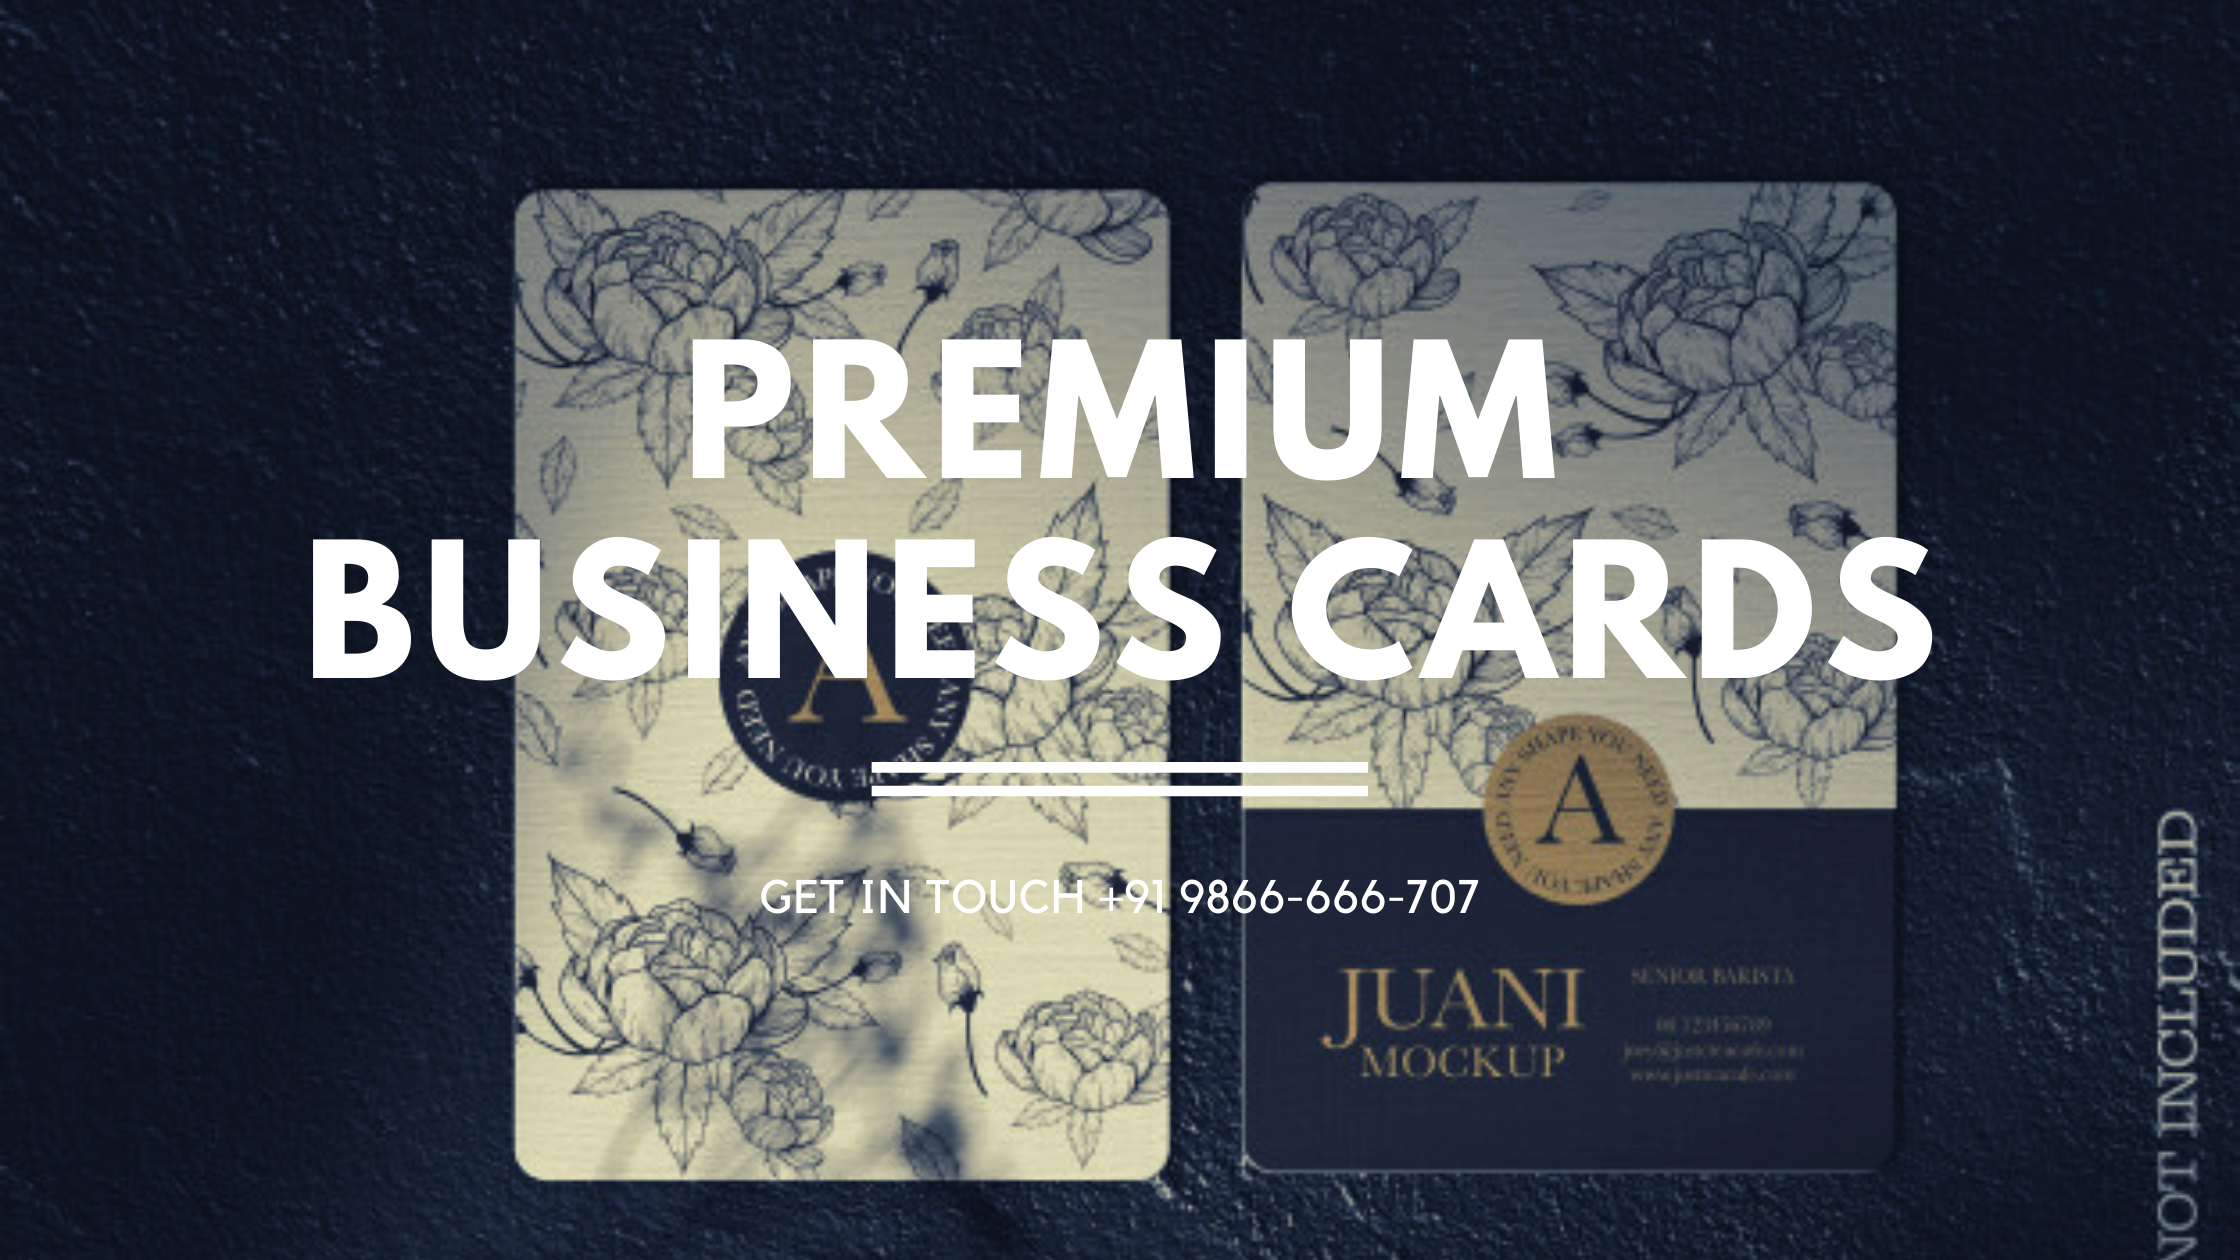 Premium business cards in Hyderabad